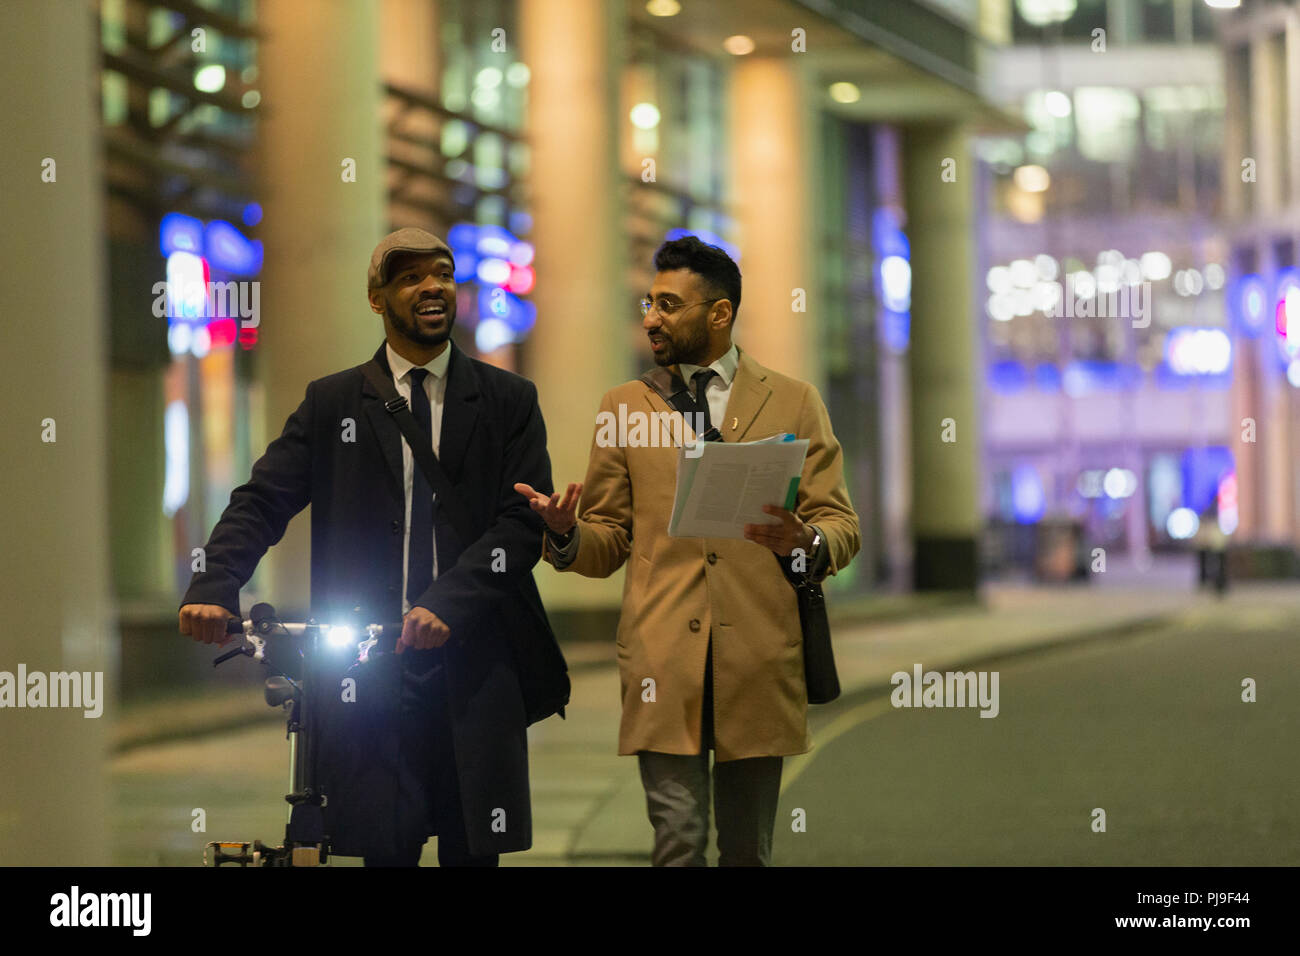 Businessmen talking, discussing paperwork on urban sidewalk at night Stock Photo